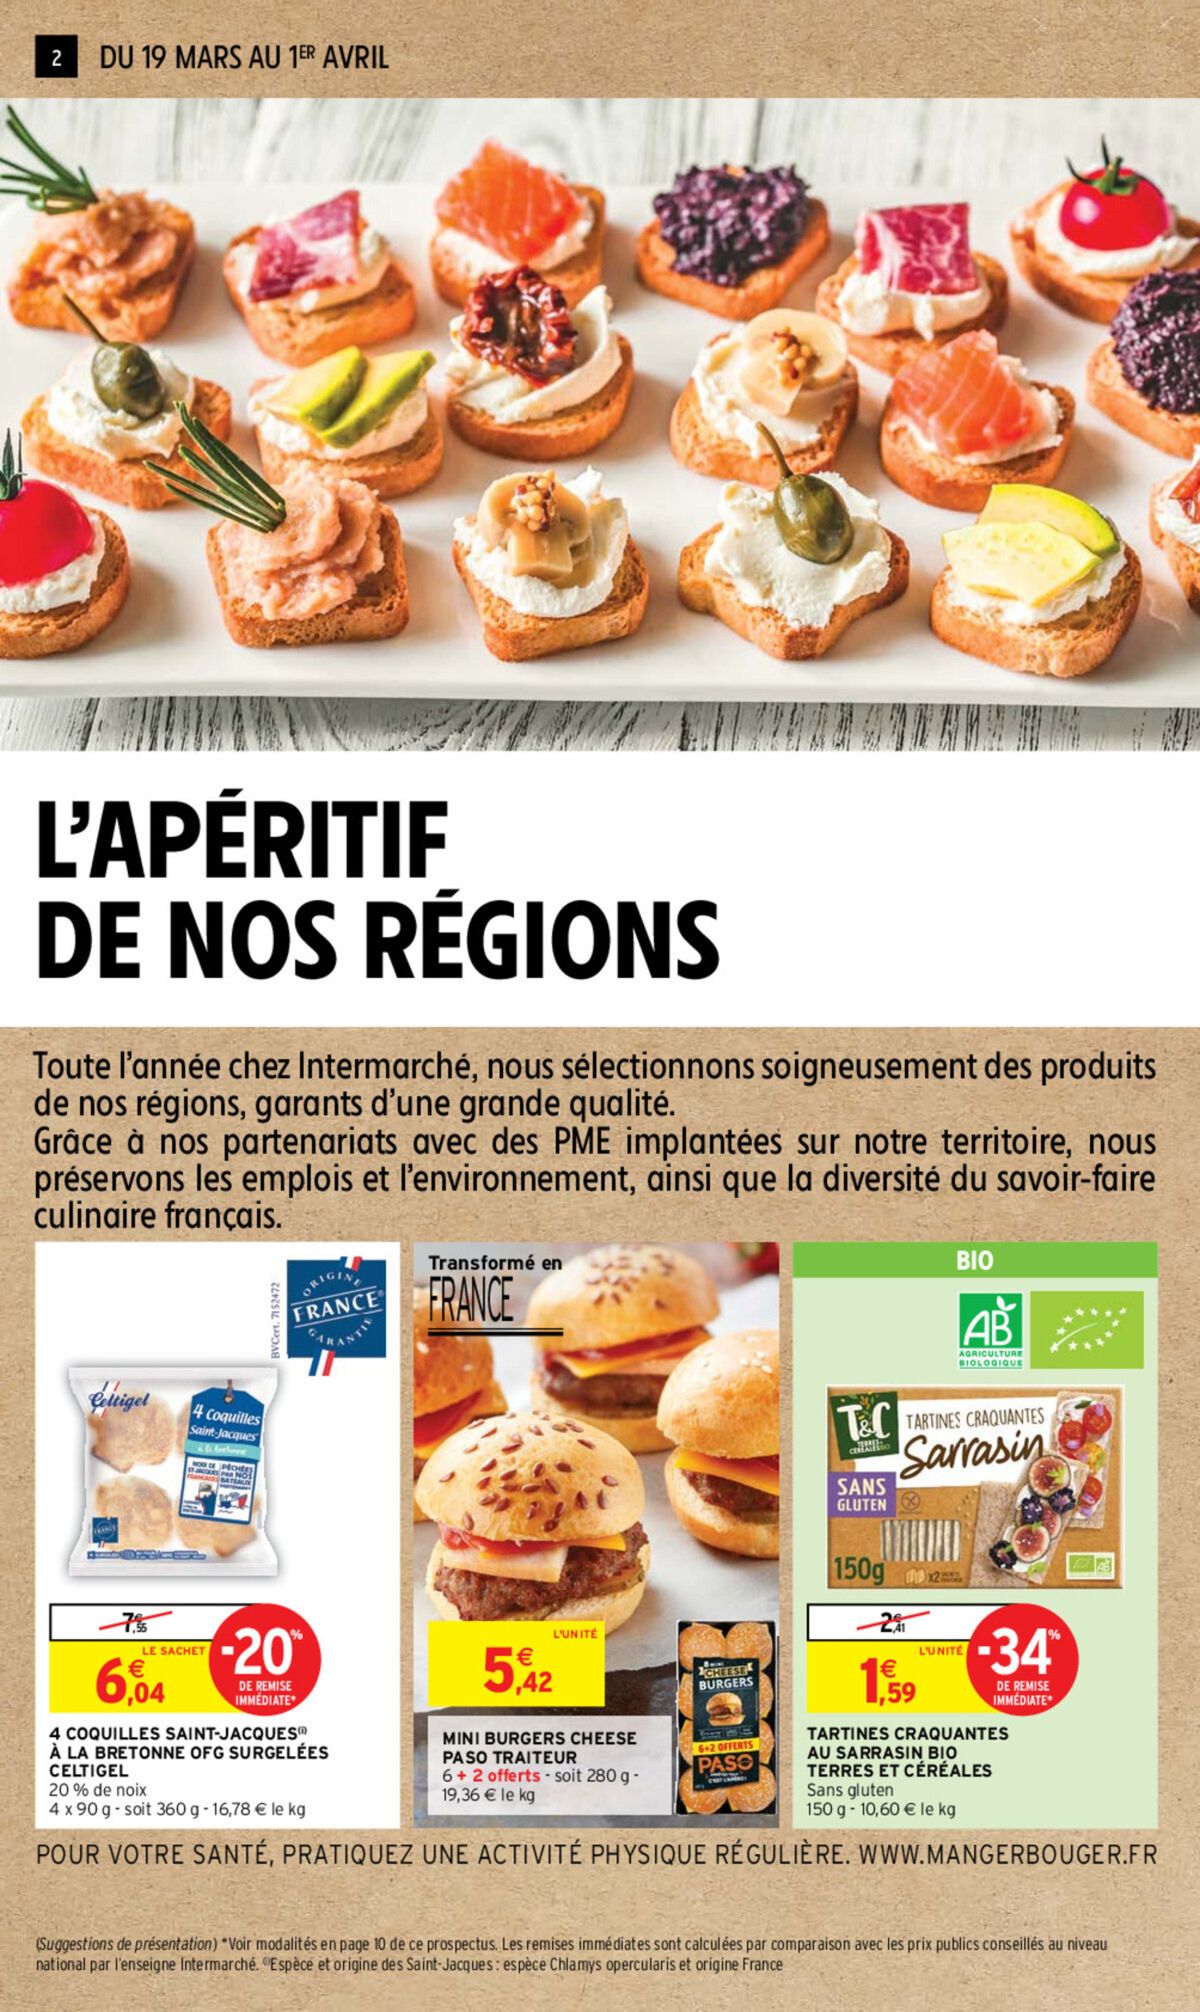 Catalogue L'APÉRITIF DE NOS REGIONS, page 00002